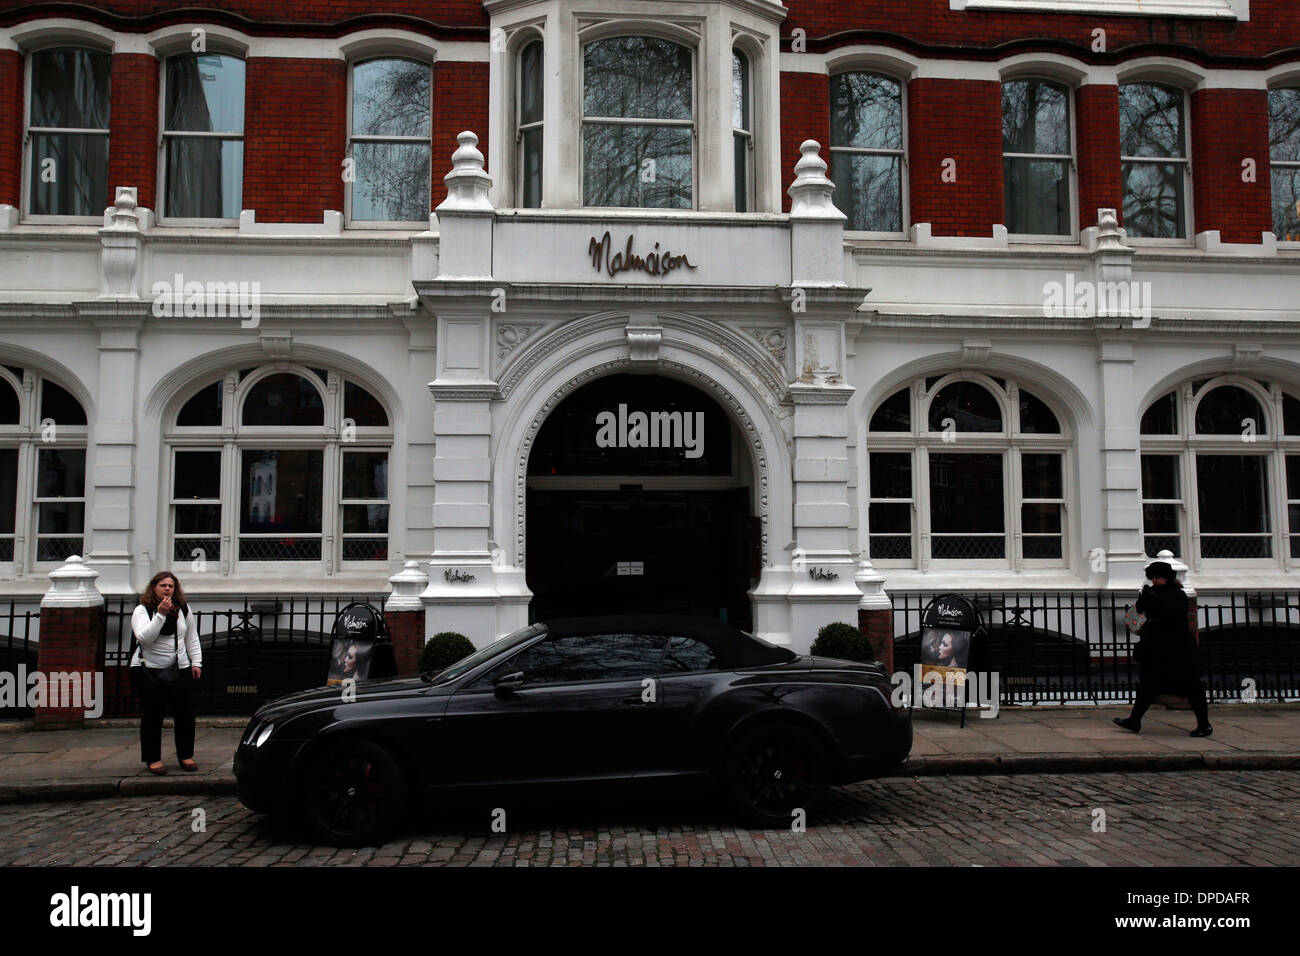 Malmaison London hotel at Charterhouse Square in London, Stock Photo